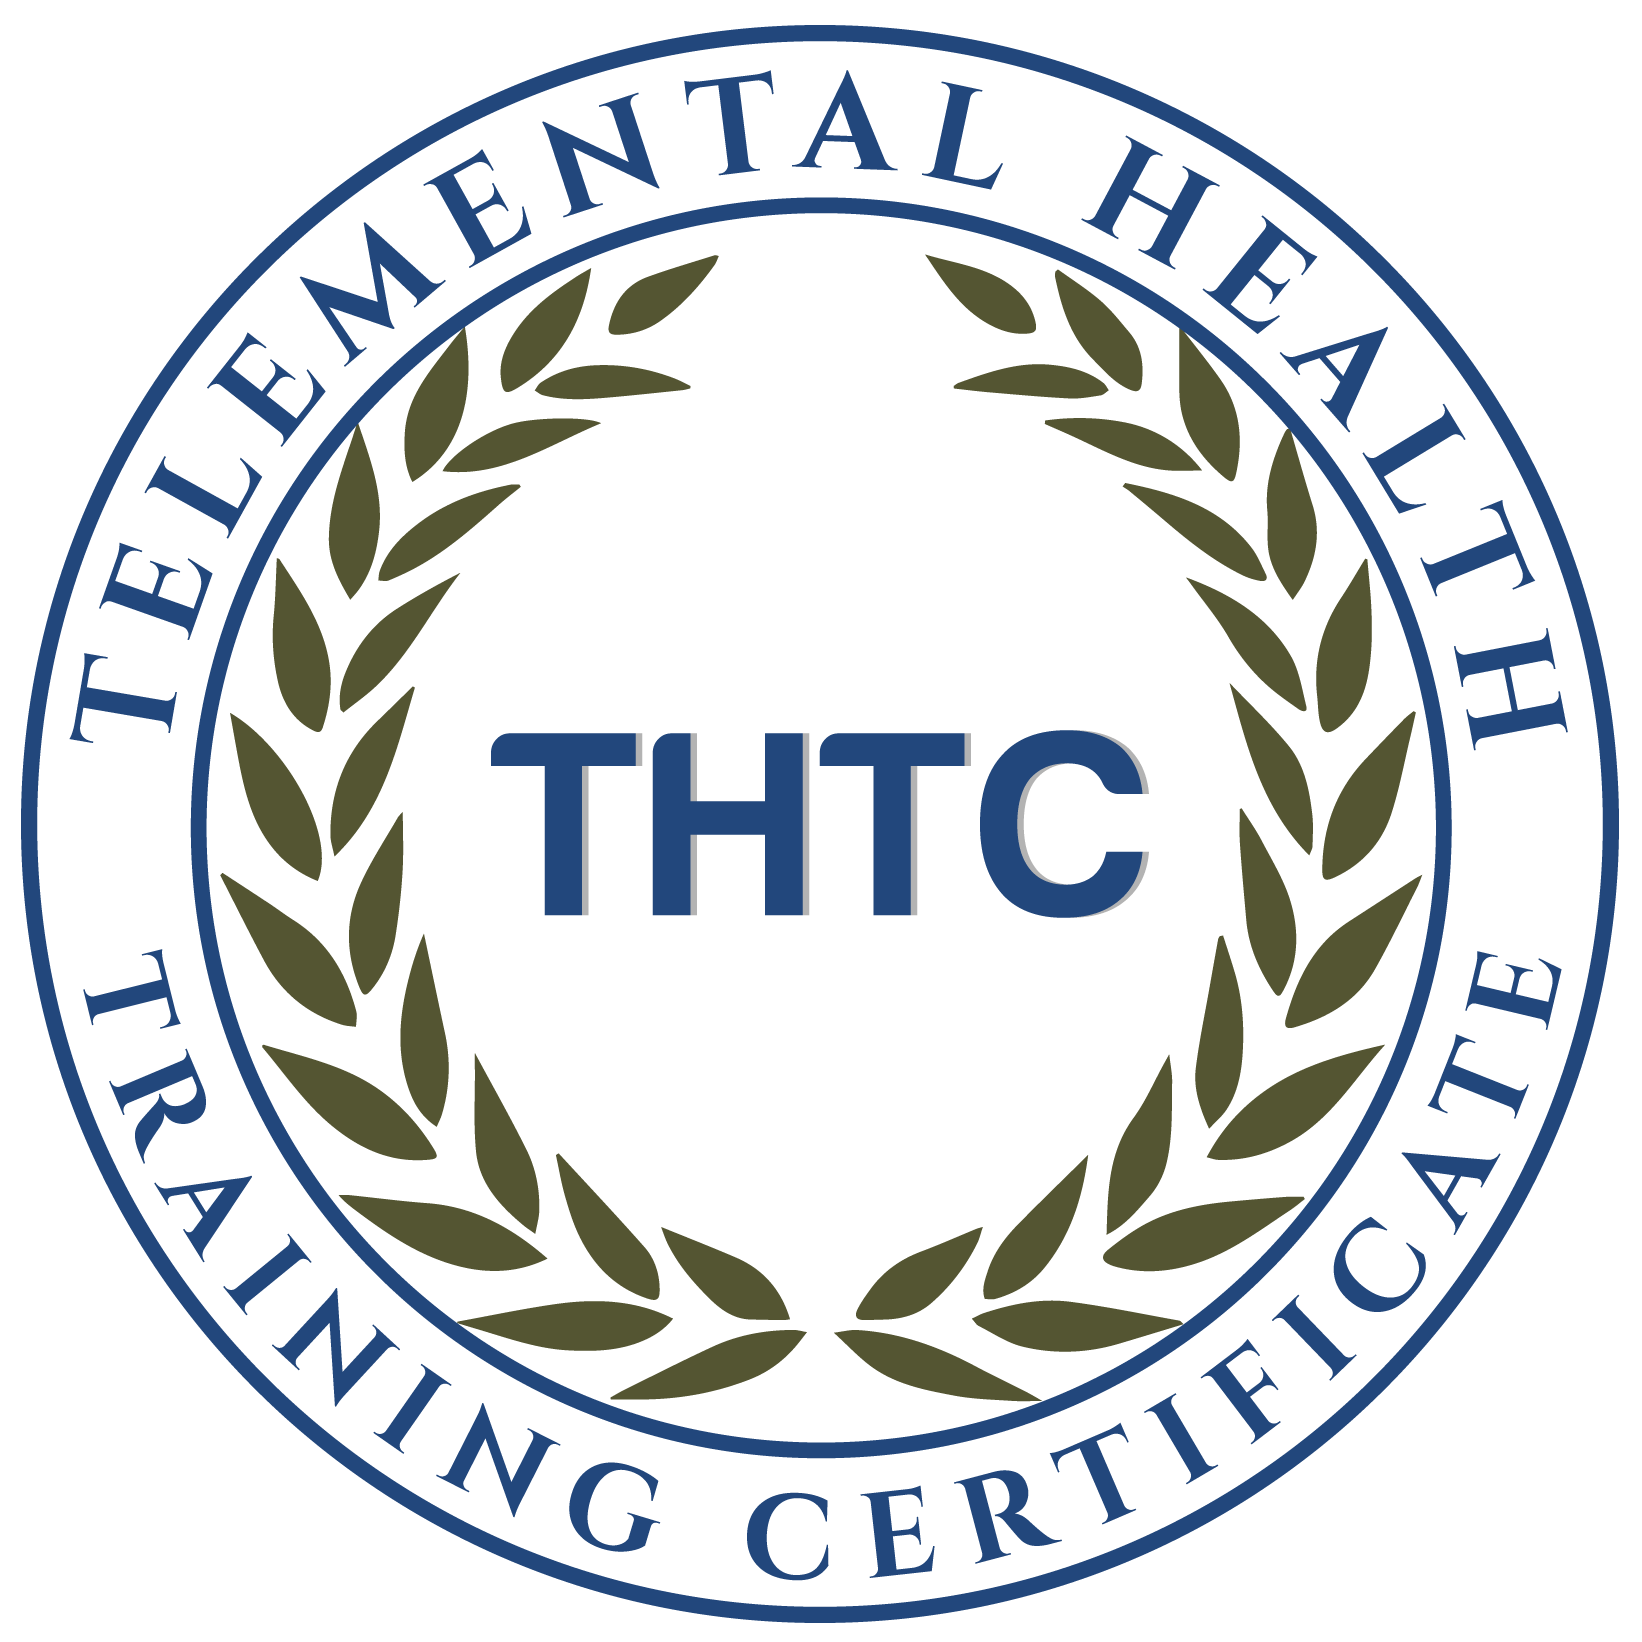 Telemental Health Training Certificate (THTC) Seal